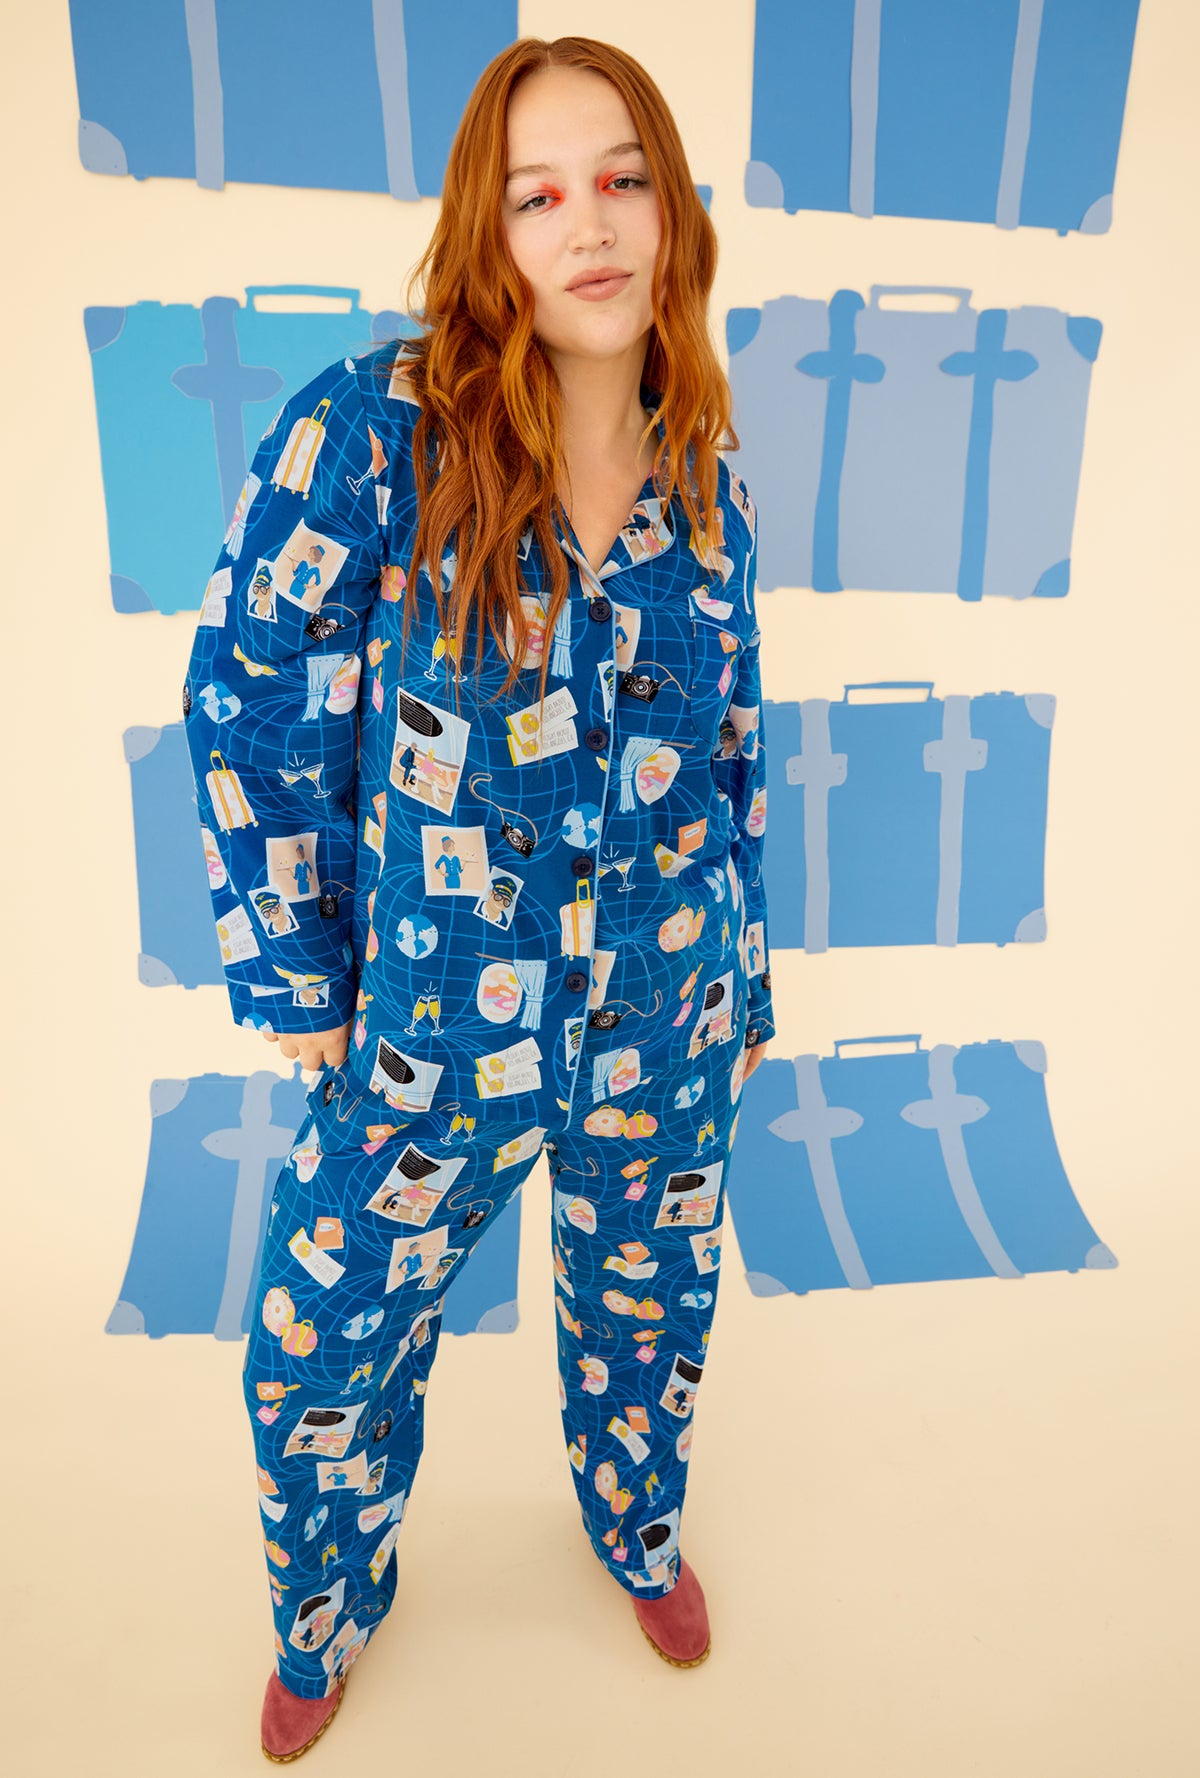 A lady wearing a blue long sleeve pajama set plus with jet setter pattern.